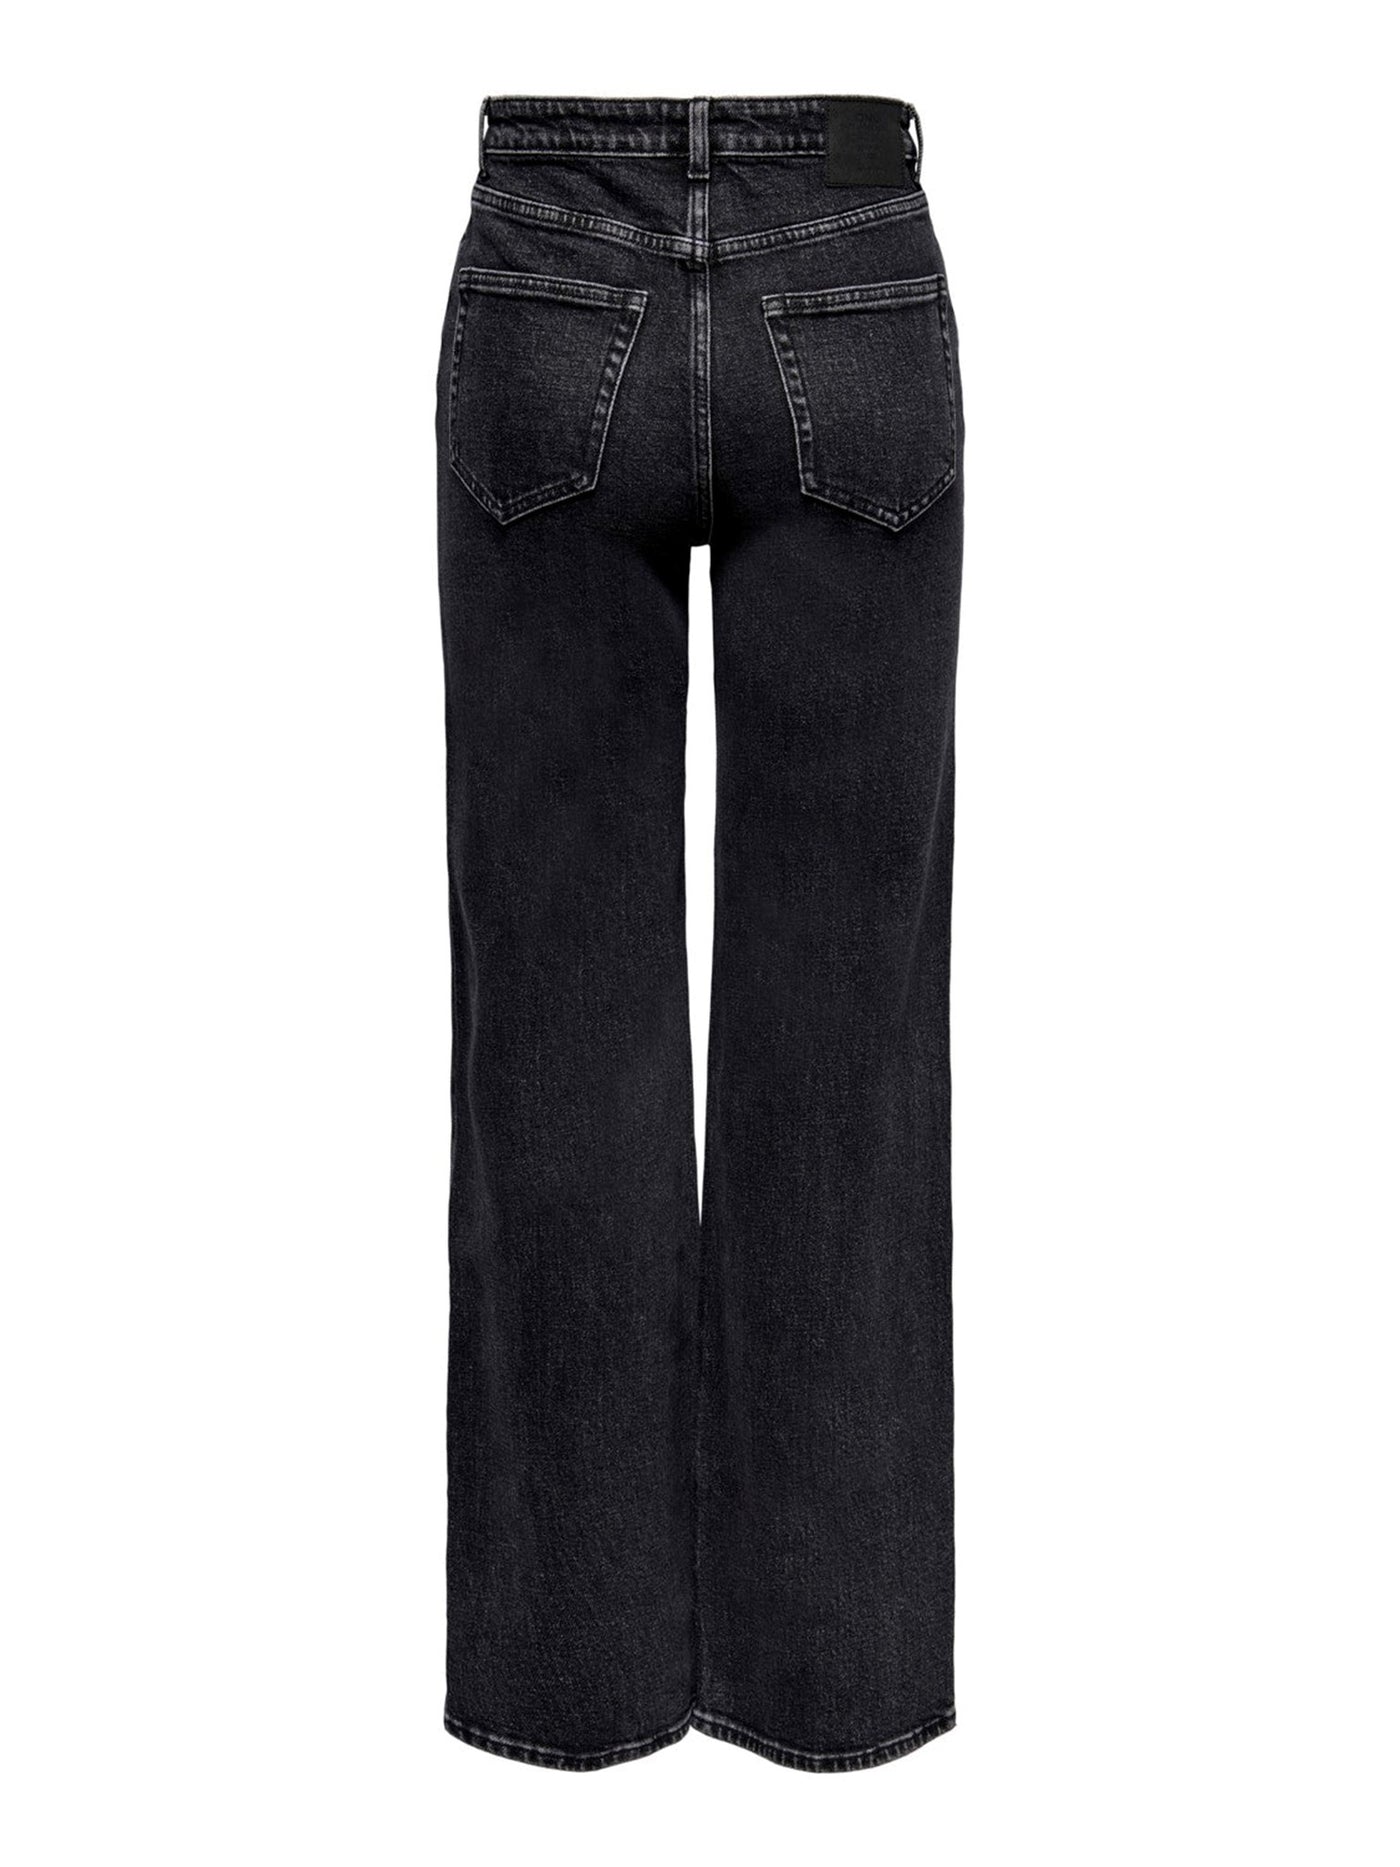 Juicy Jeans (wide leg) - Sort denim - ONLY 4